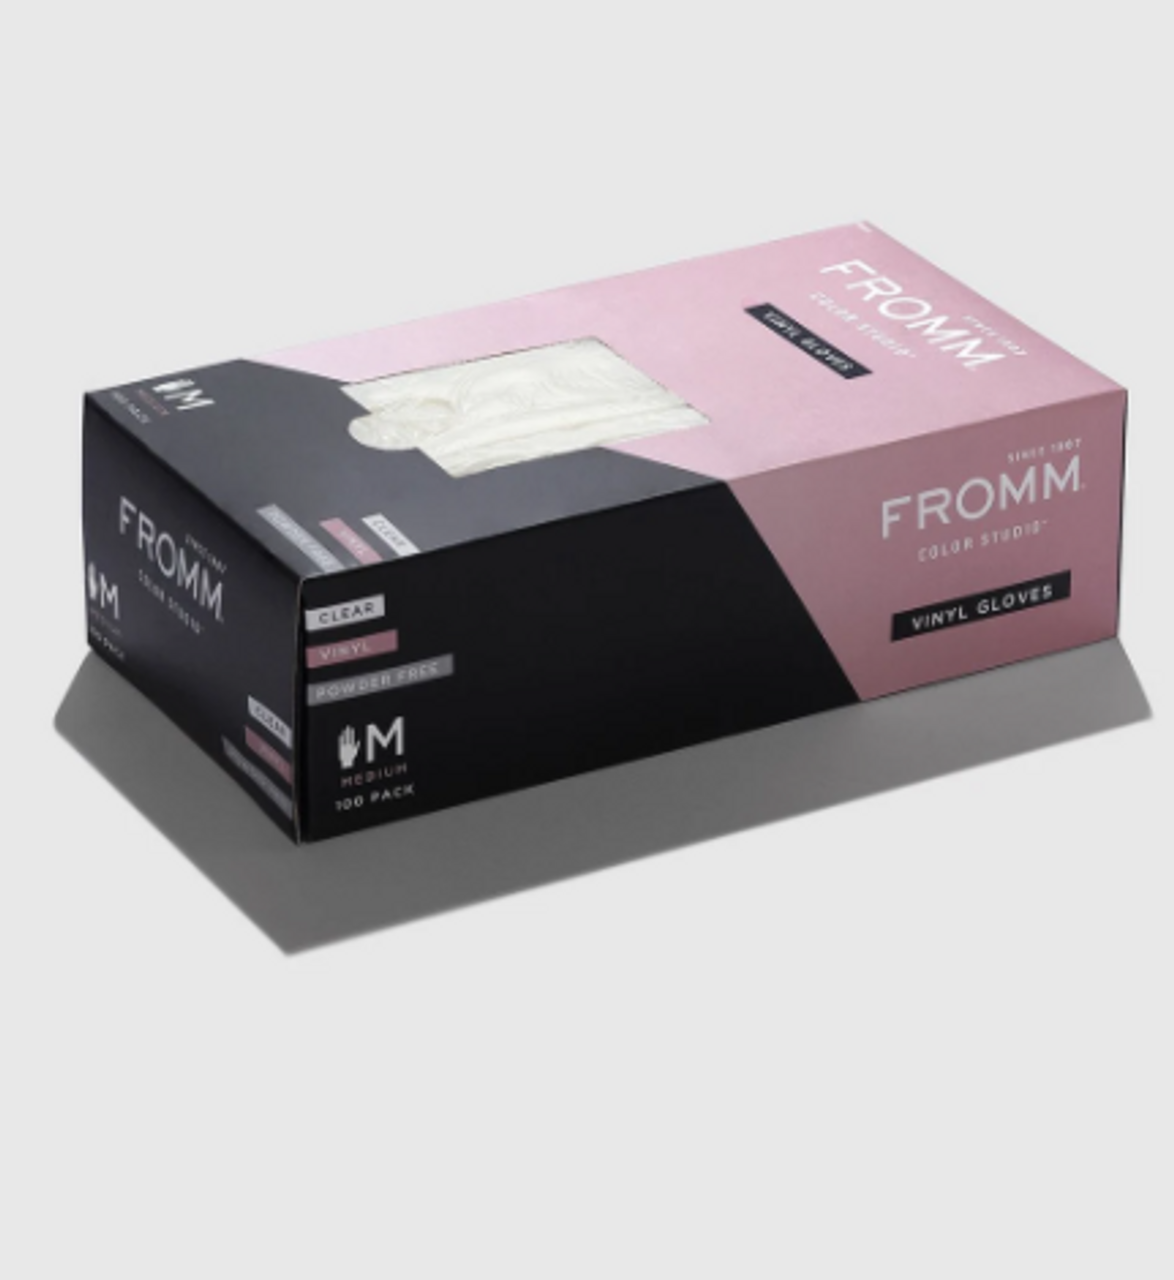 Fromm Color Studio Professional Vinyl Gloves - Medium - Black - 100 Pack